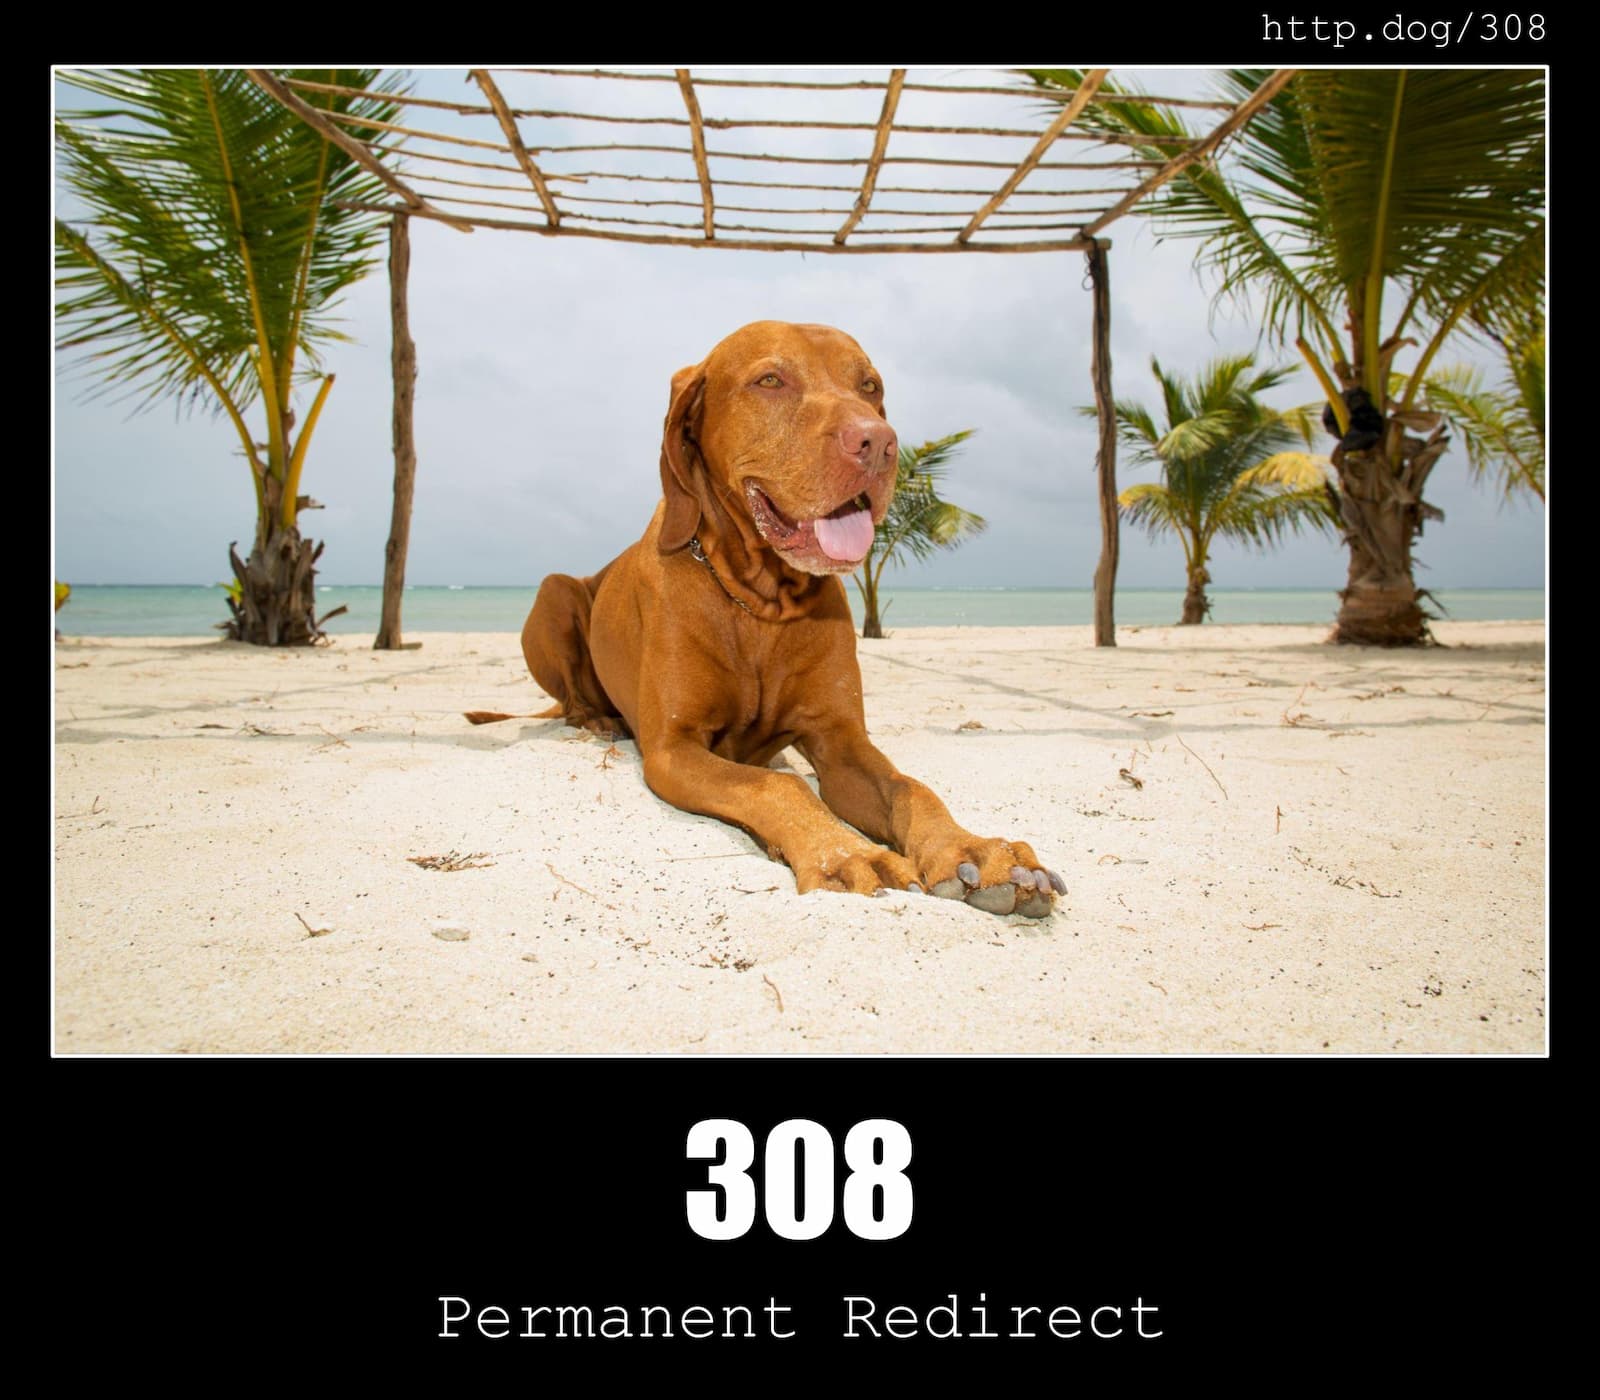 HTTP Status Code 308 Permanent Redirect